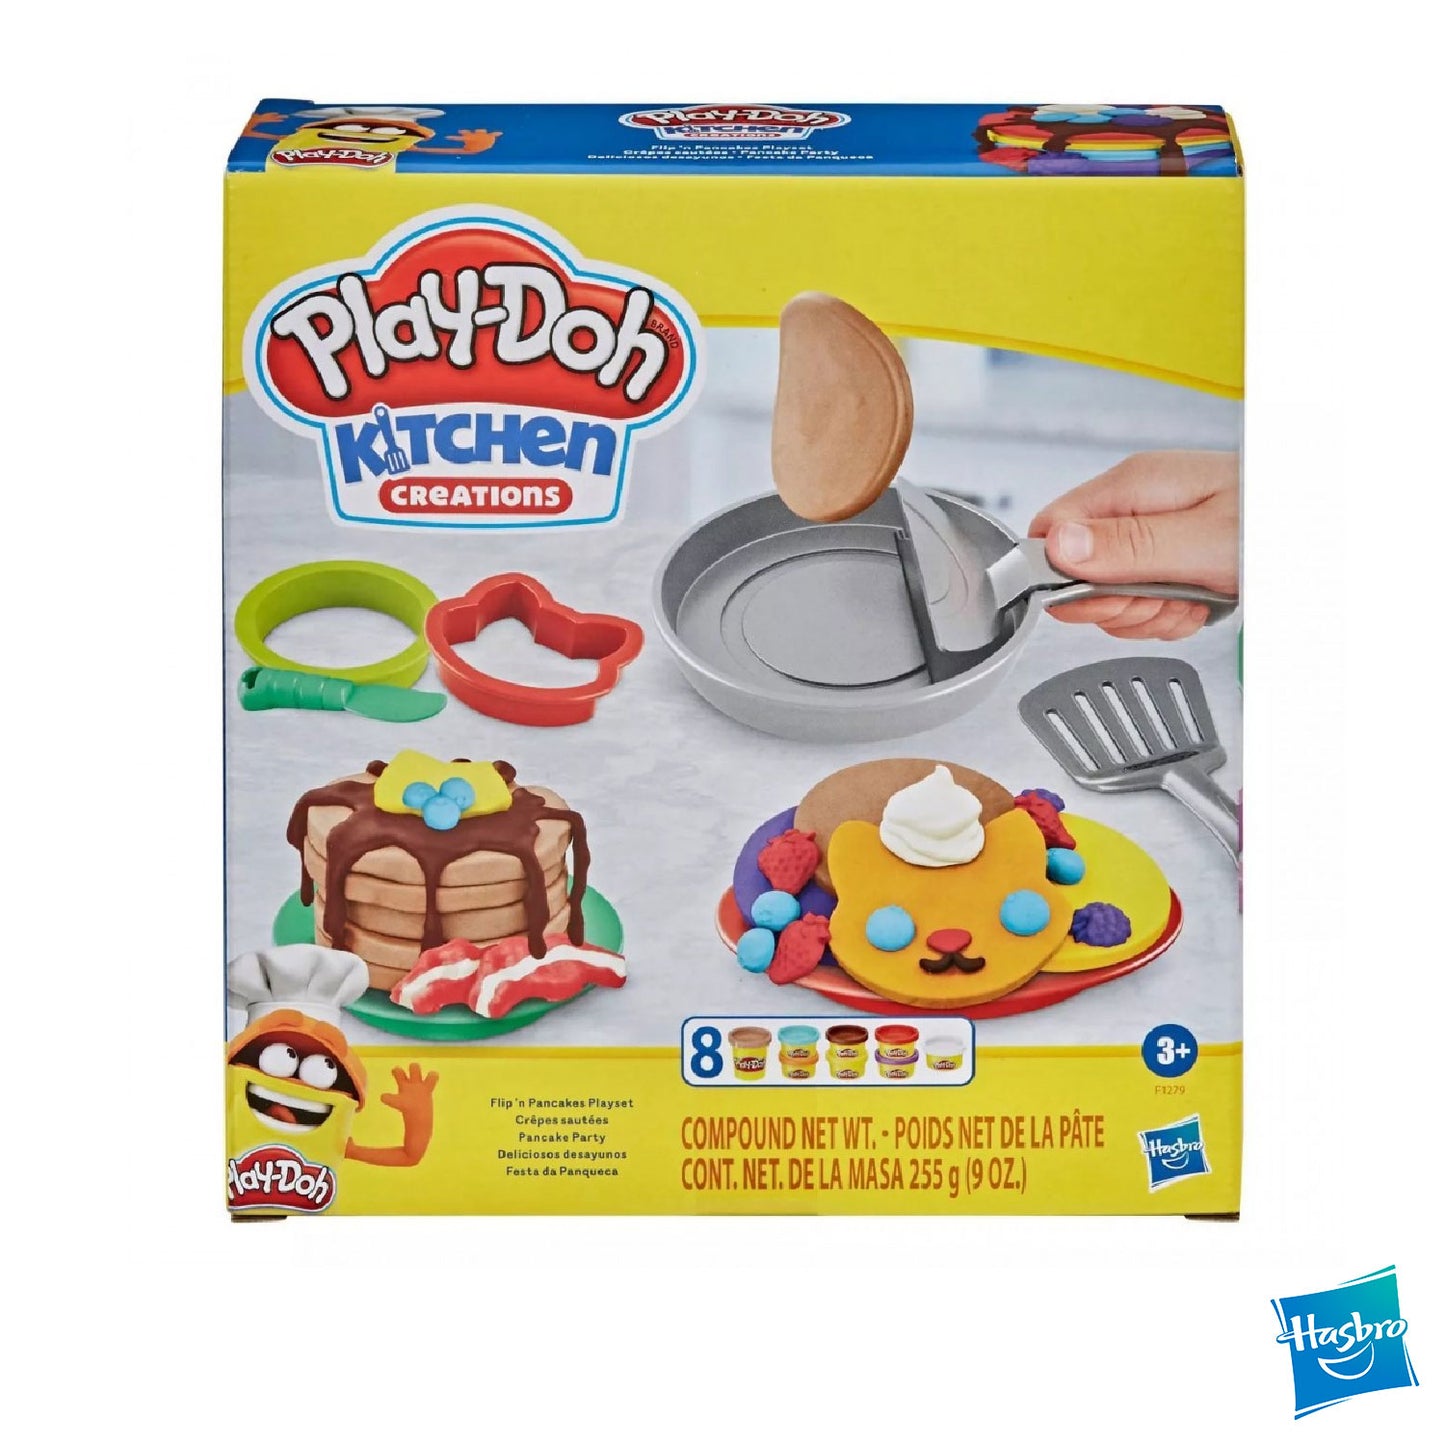 Hasbro - Play-Doh Pancakes Playset F12795L0